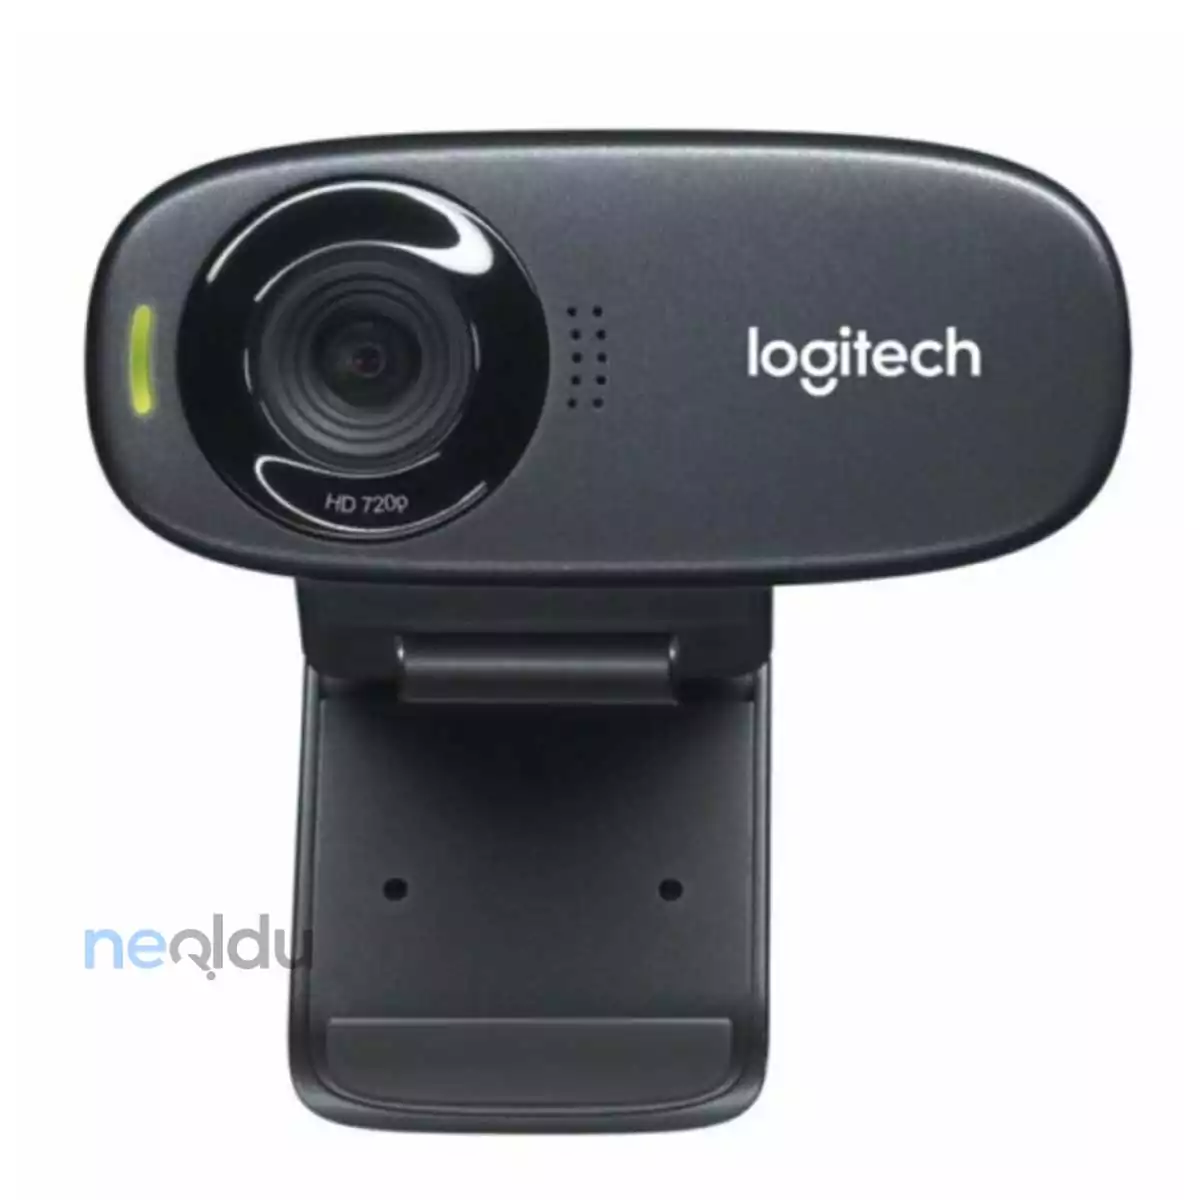 en-iyi-webcam-onerisi-002.webp